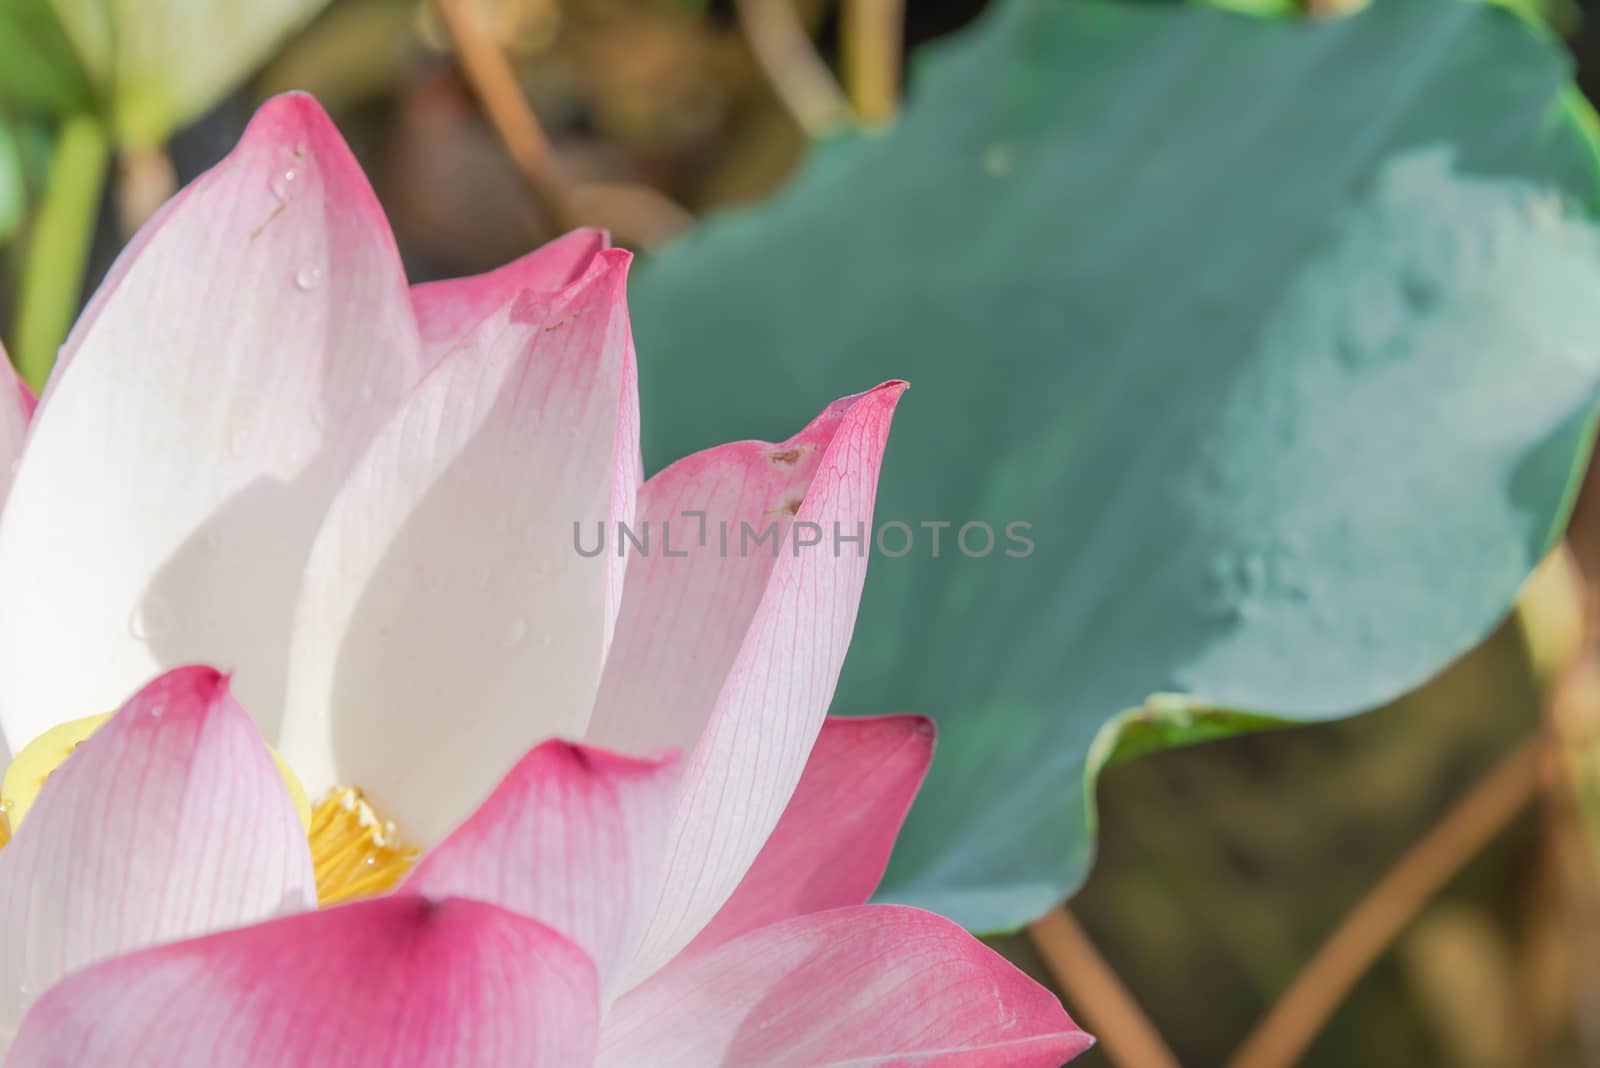 Close-up blooming pink lotus flower with golden stamen (or Nelumbo nucifera gaertn, Nelumbonaceae, sacred lotus) cultivated in water garden. Lotus is national flower of India and Vietnam